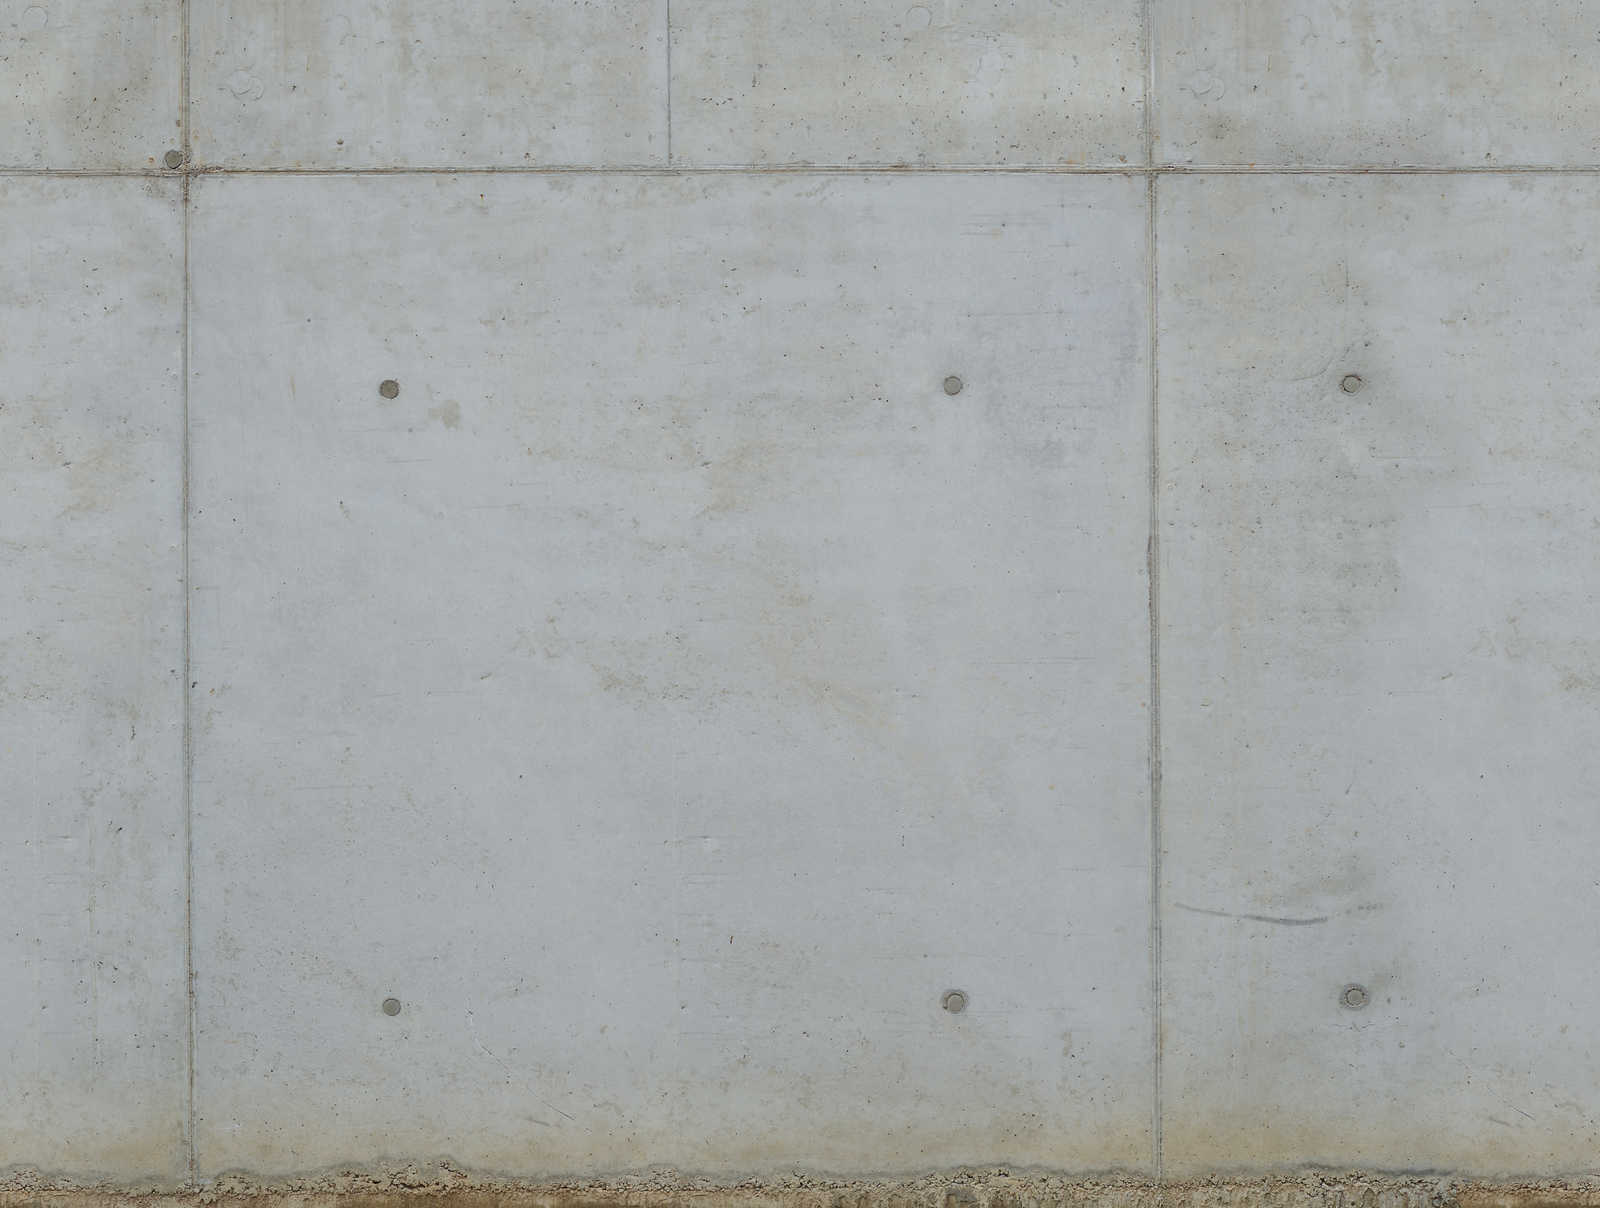             Concrete look wallpaper in cool colours - grey, beige
        